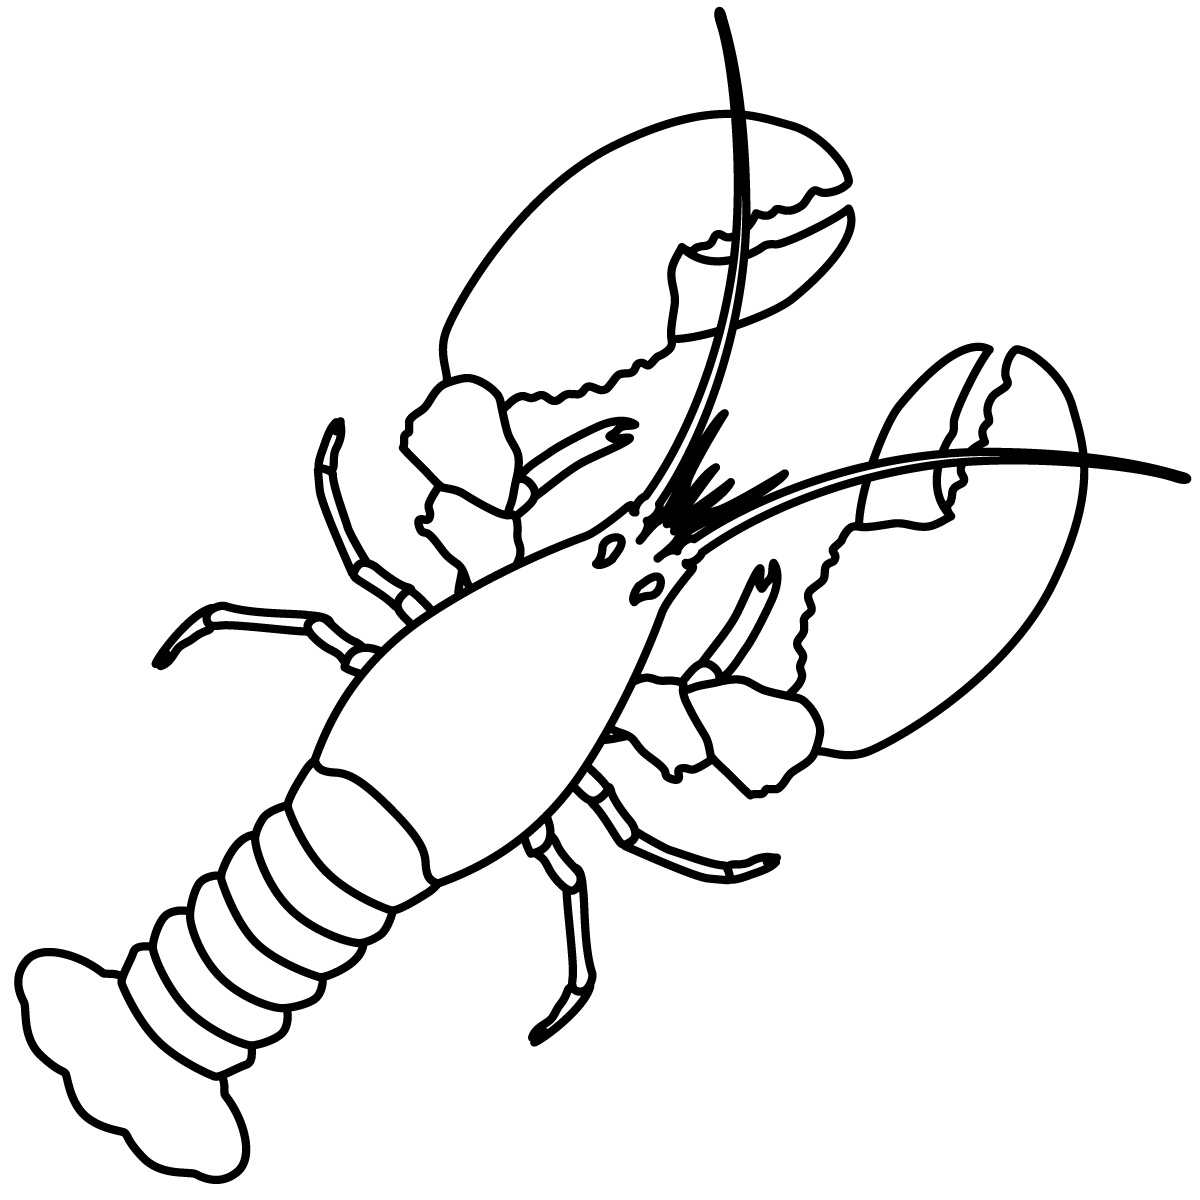 Lobster activity